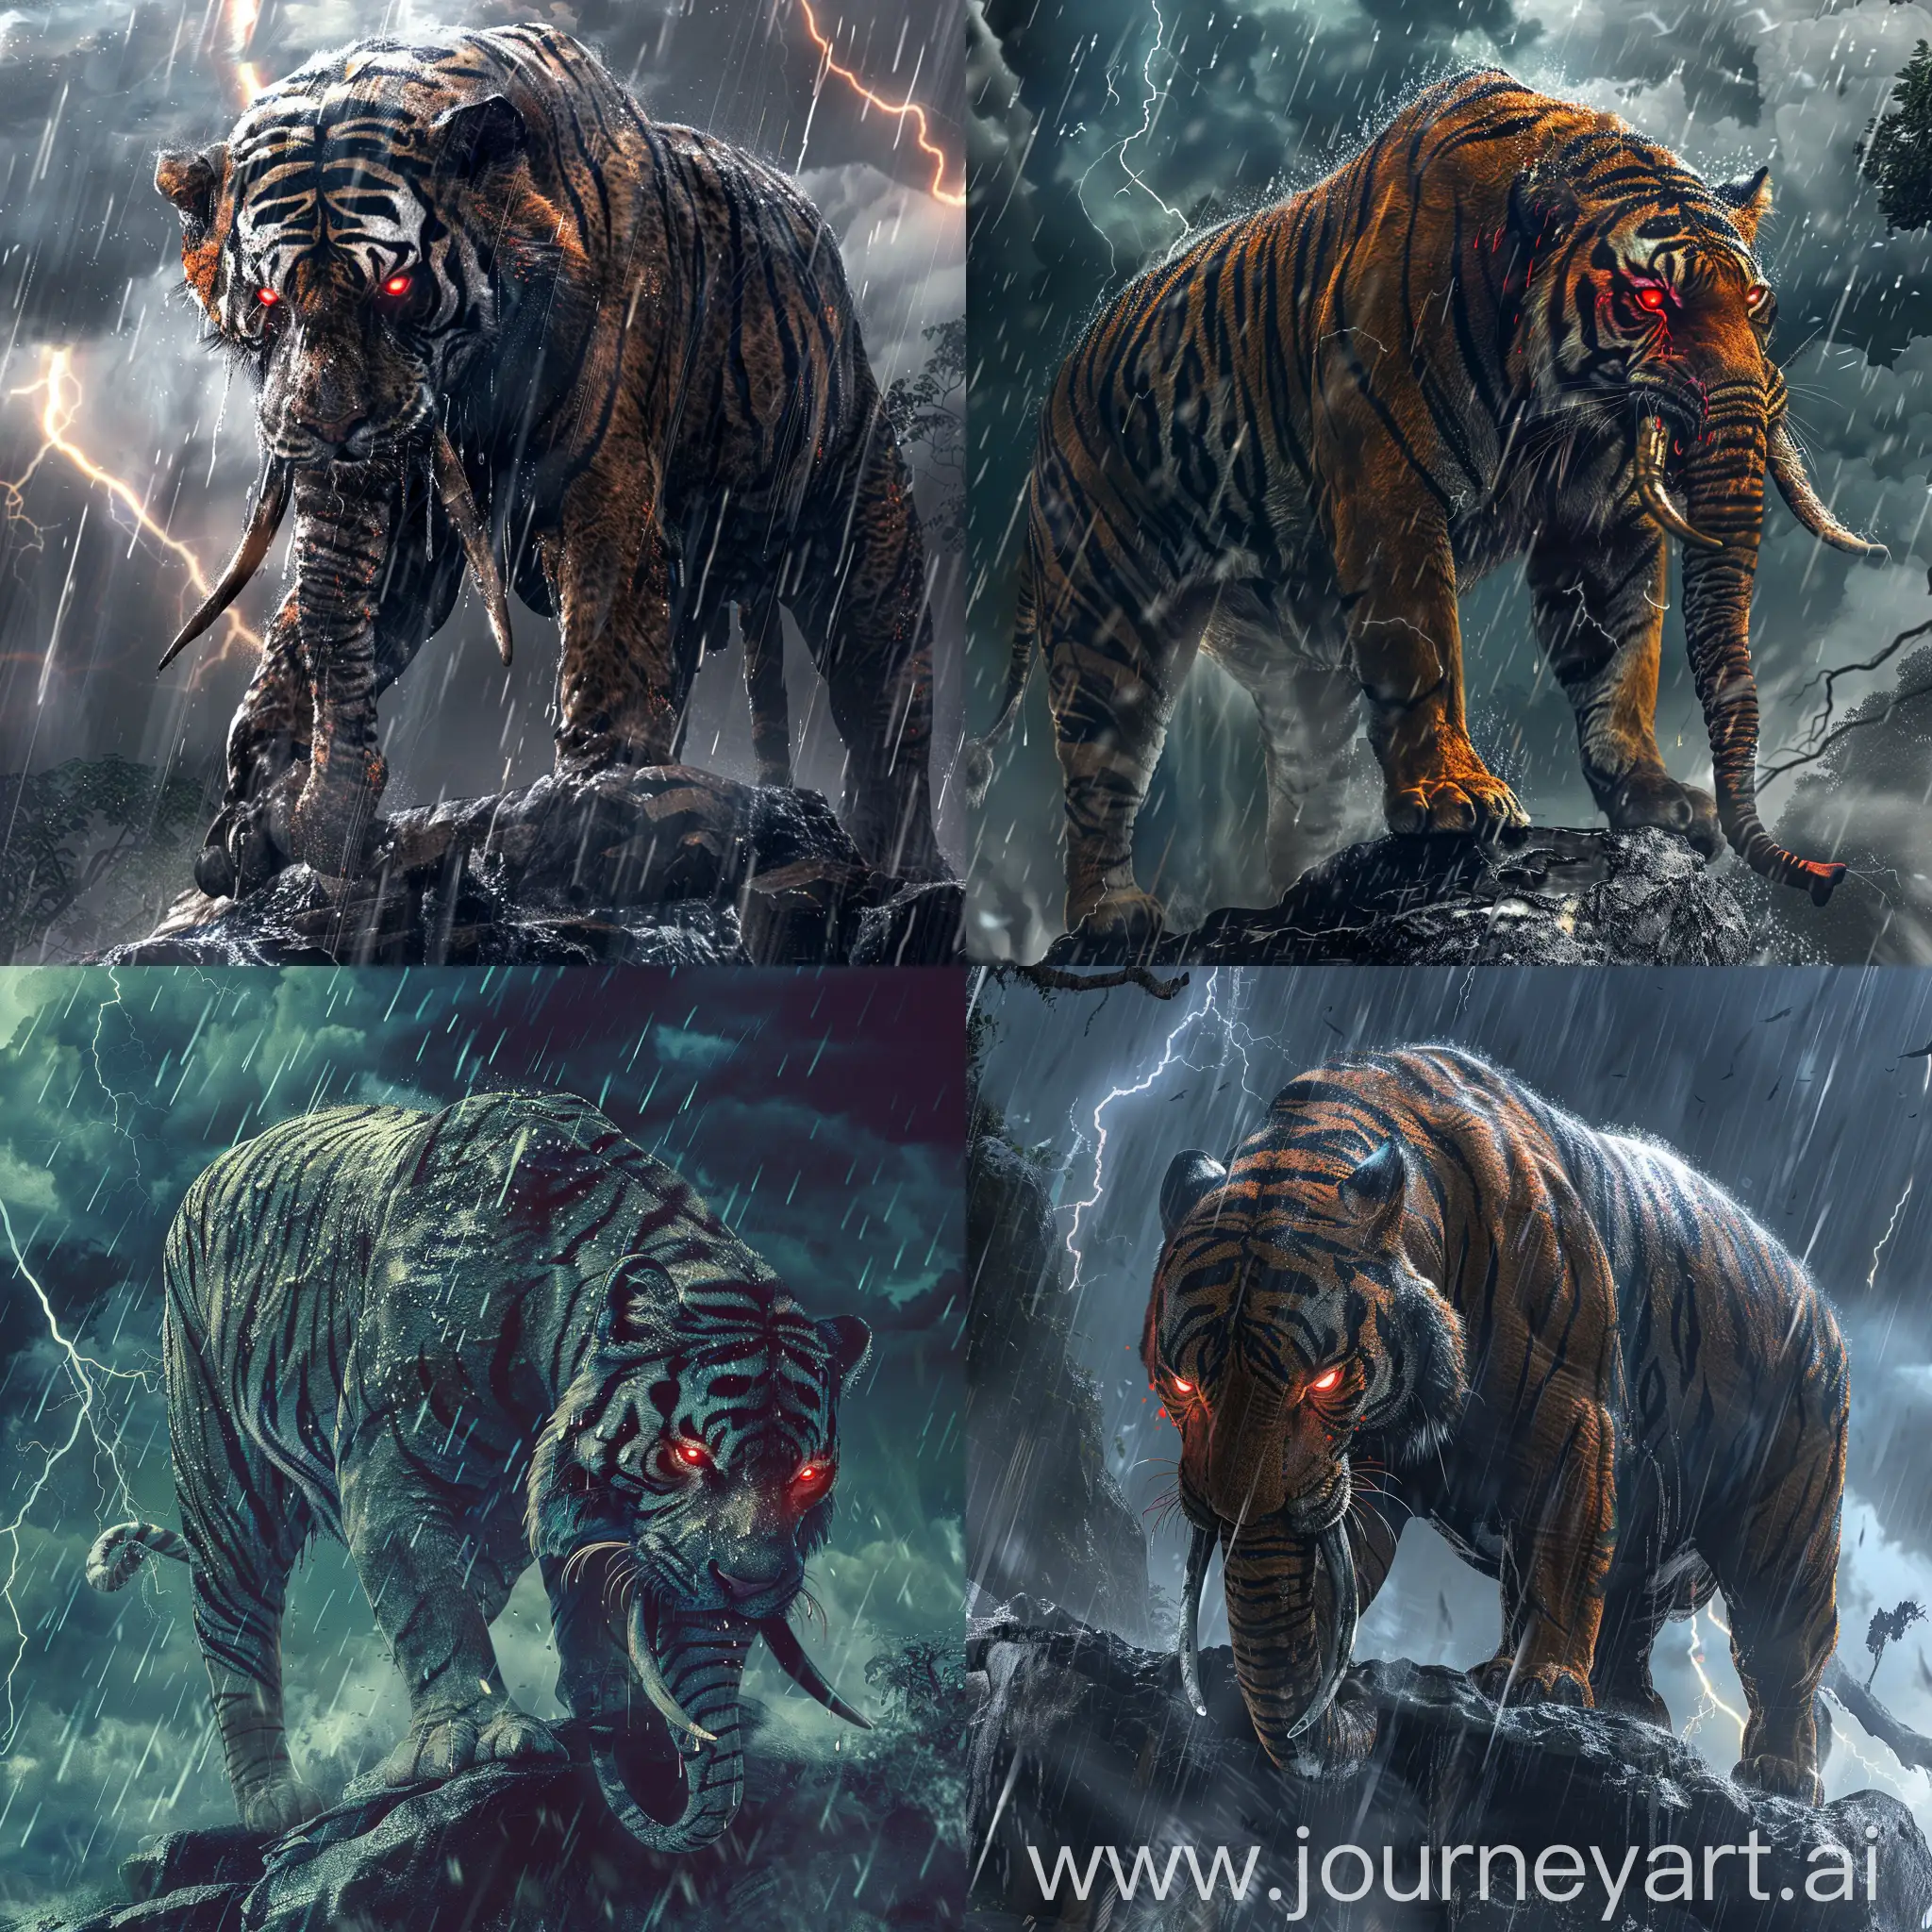 Mythical-Beast-Hybrid-in-Thunderstorm-TigerElephant